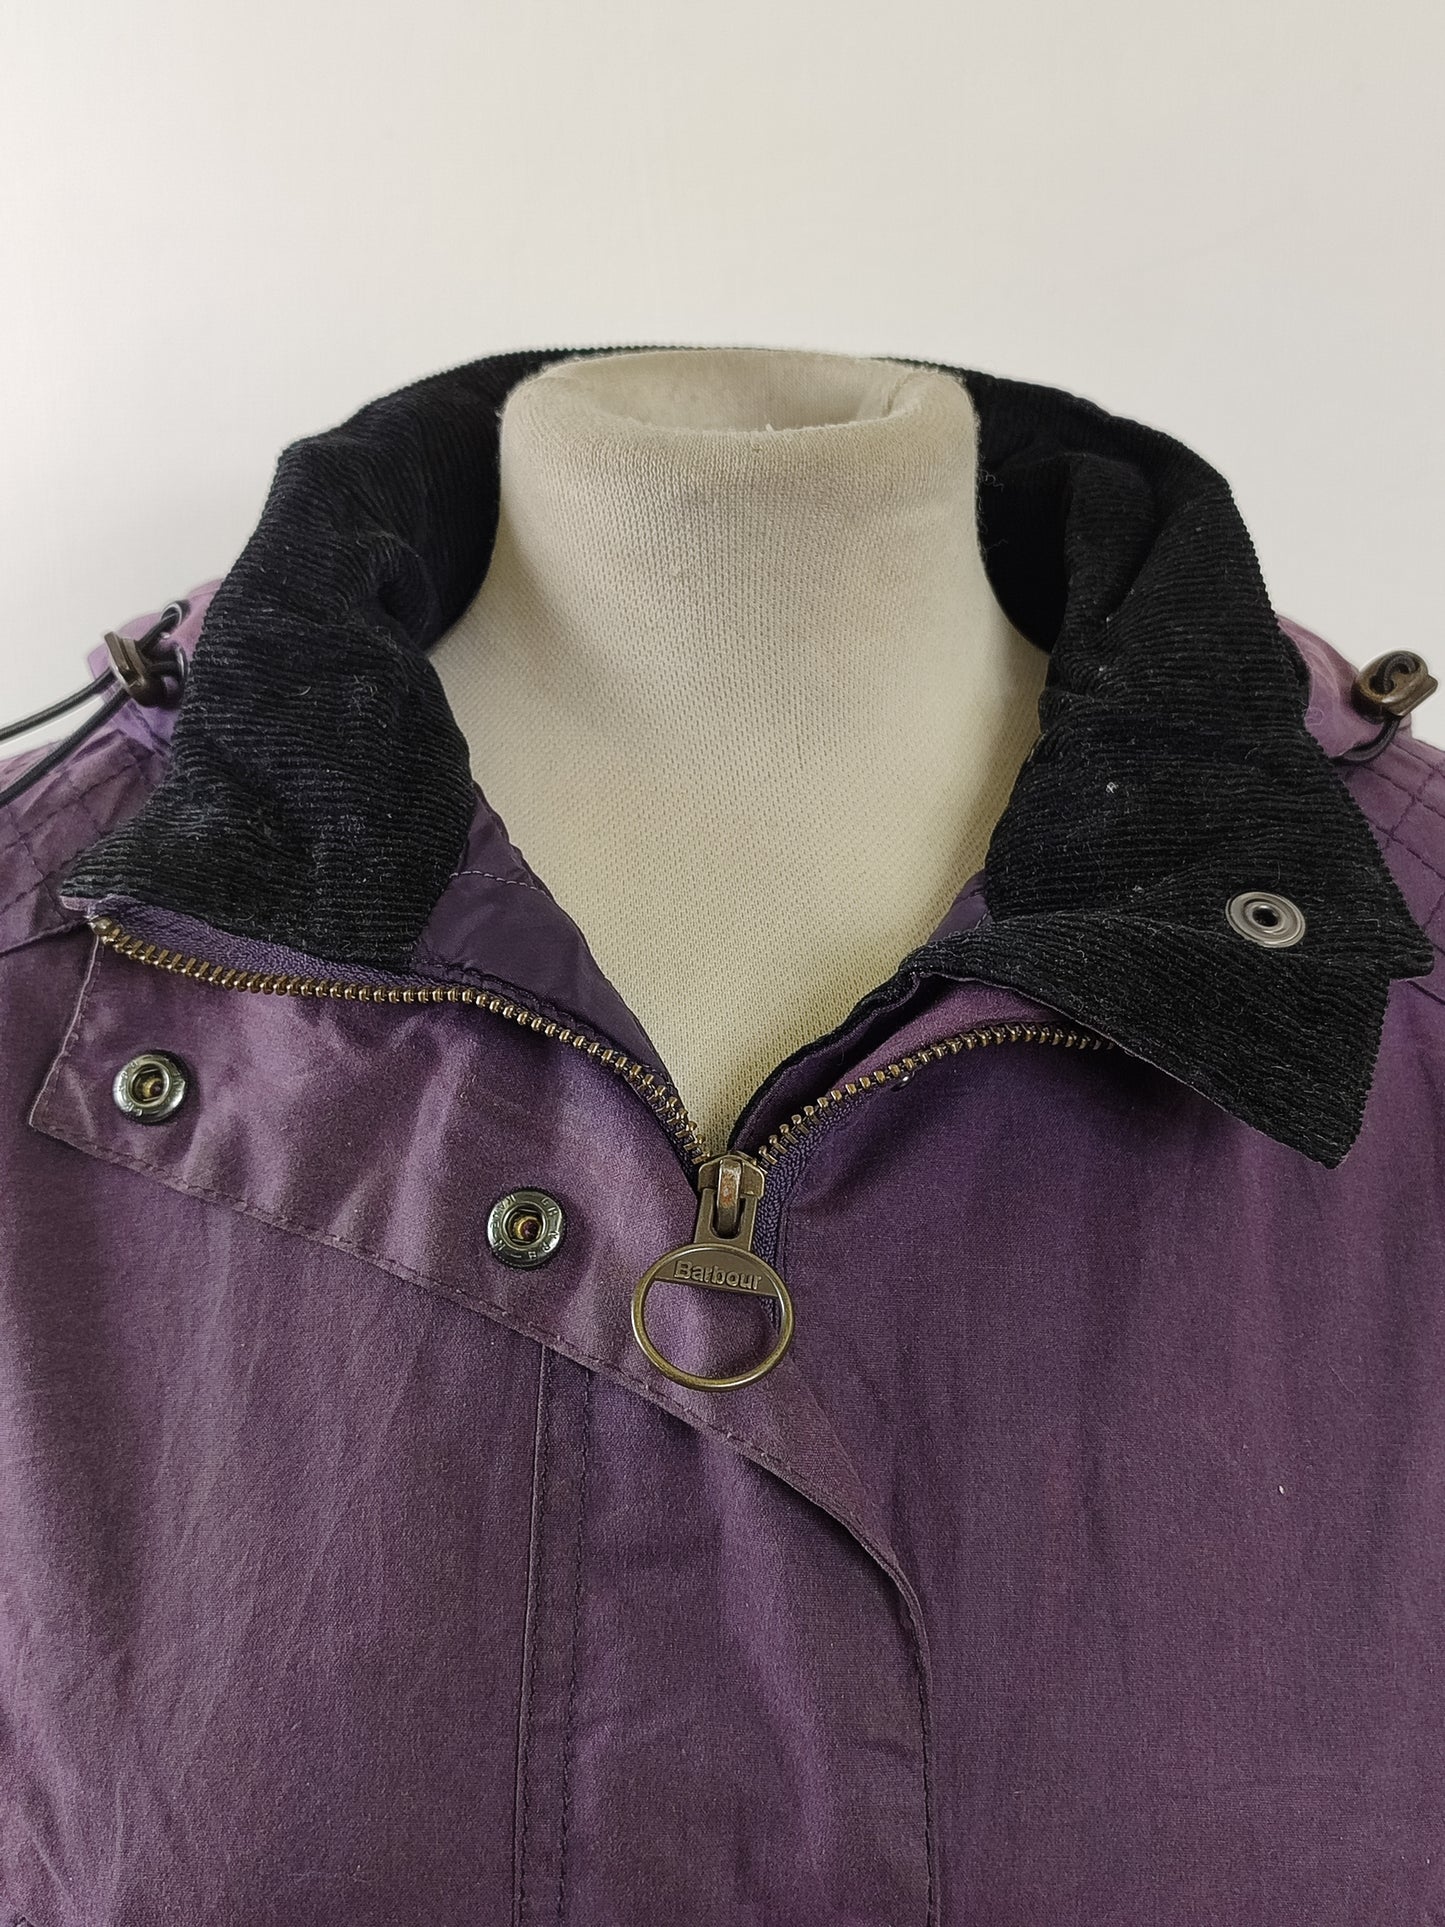 Giacca Barbour donna viola Rebel UK16 tg. 44/46 Purple Lady Wax Rebel jacket size uk16